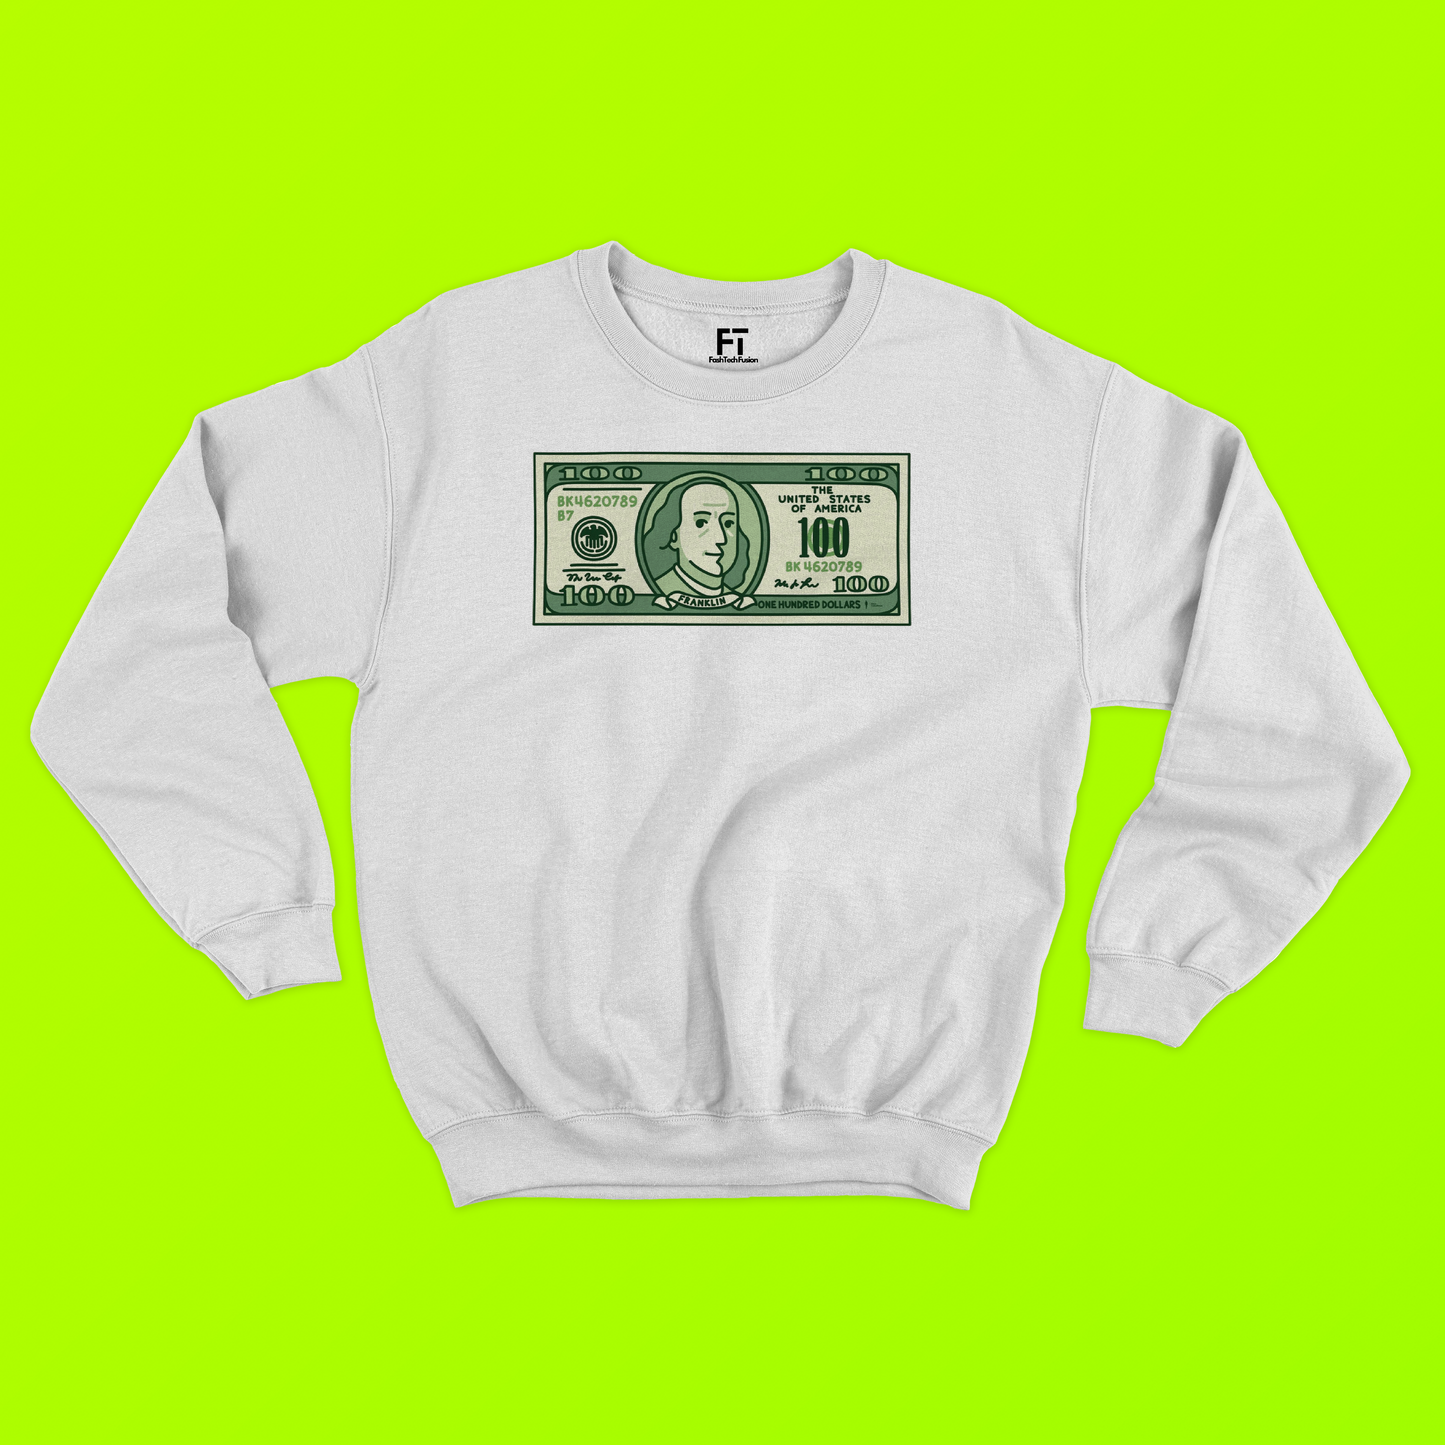 Dollar note Sweatshirt